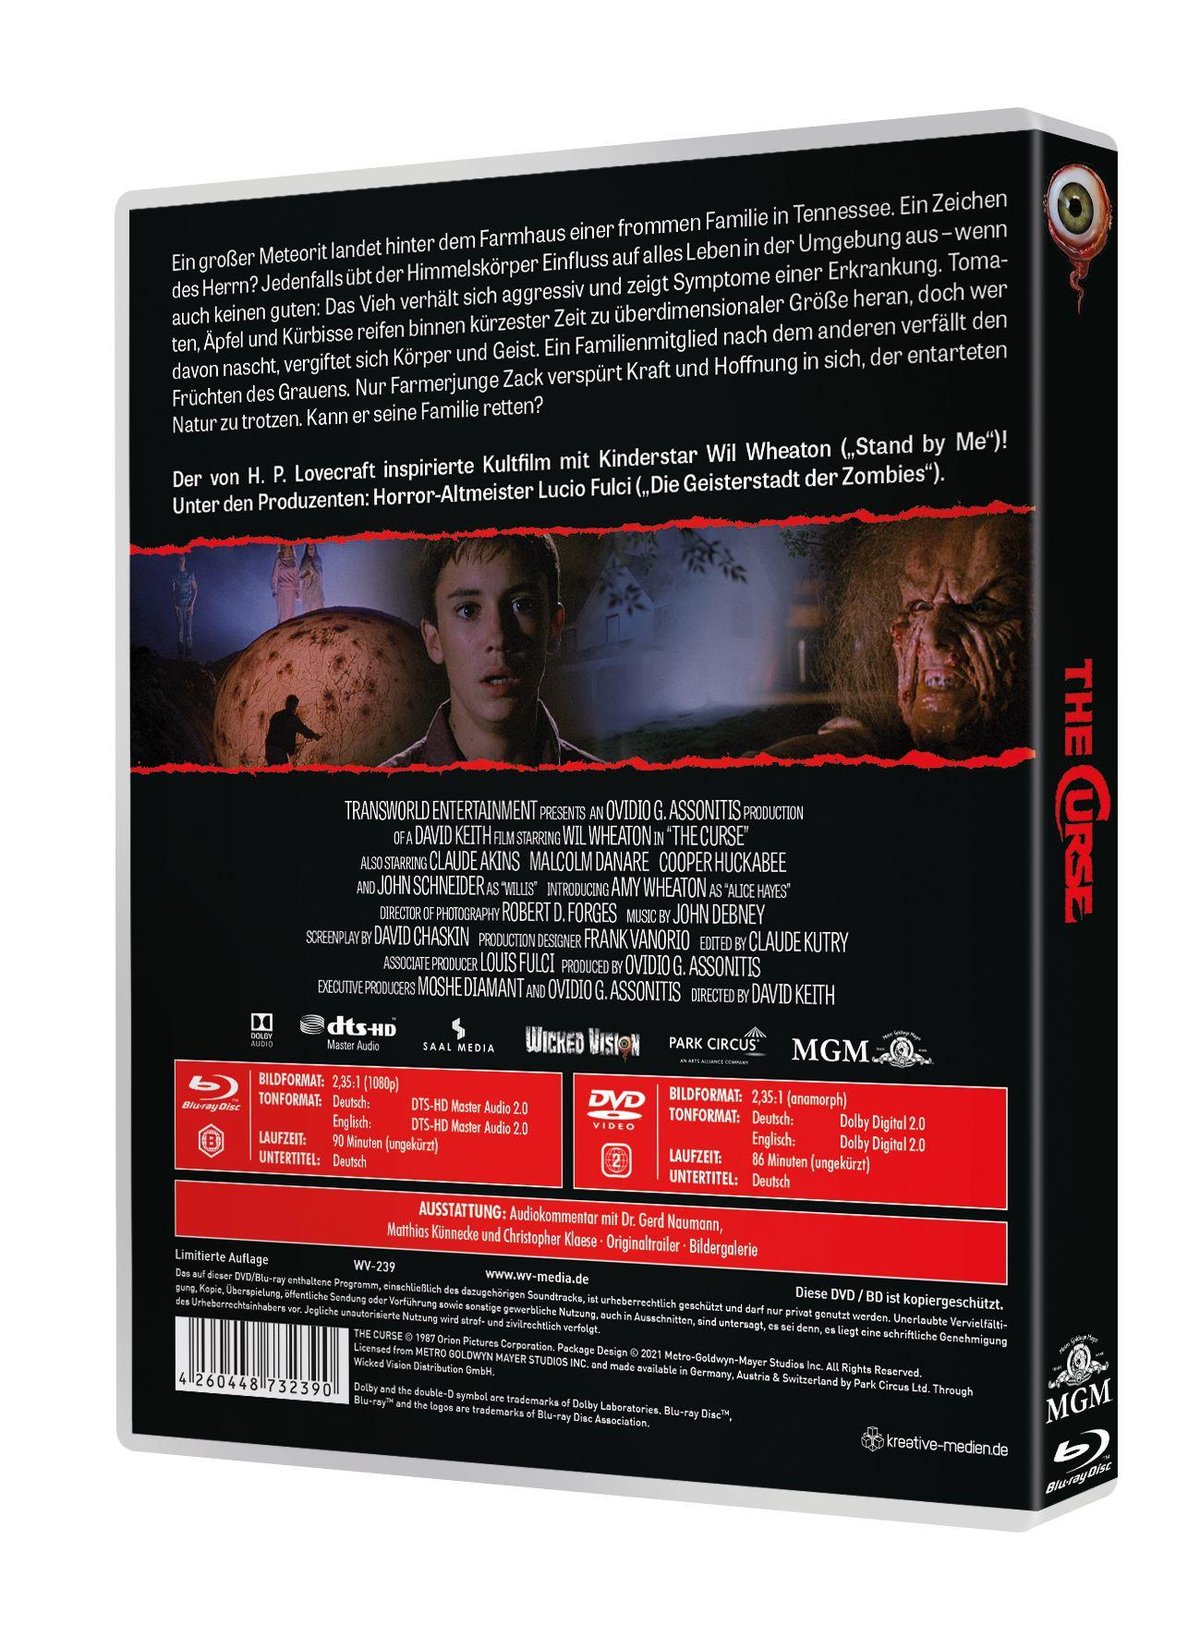 Curse, The - Uncut Edition (DVD+blu-ray)